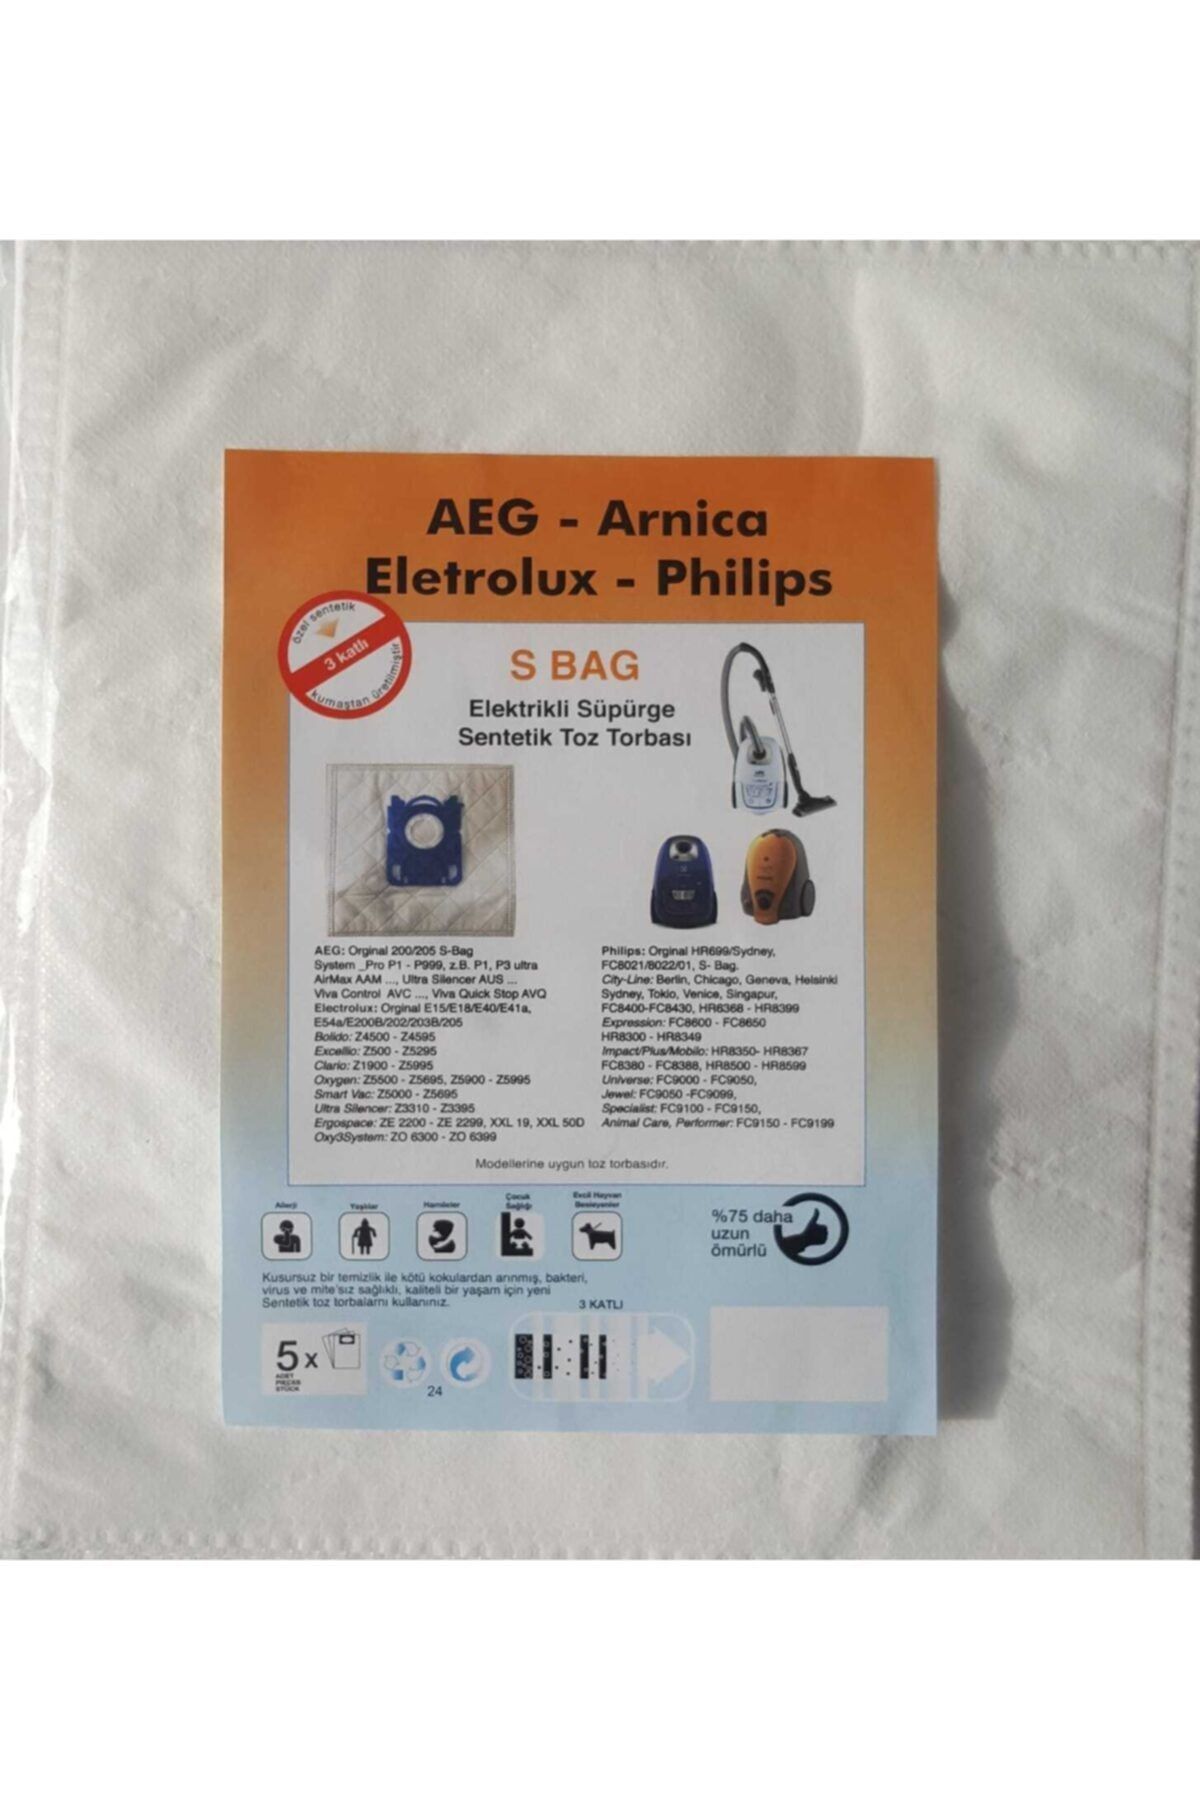 AEG - Arnica - Eletrolux - Philips S Bag Elektrikli Süpürge Sentetik Toz Torbası (5 Adet)